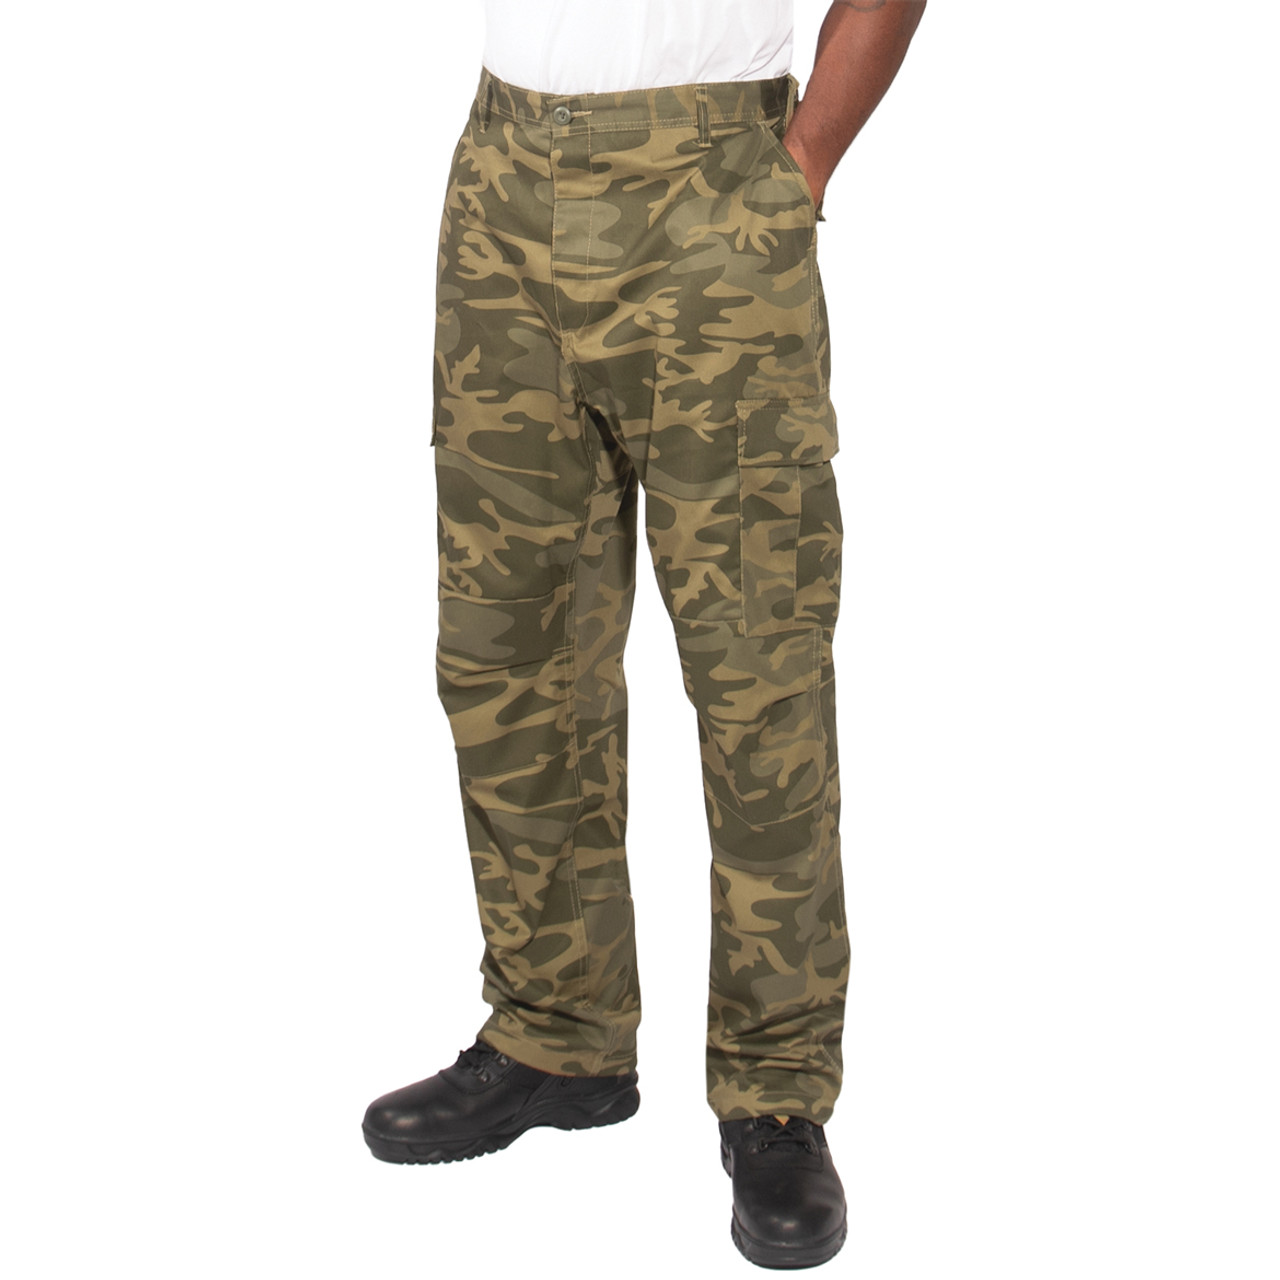 Shop Red Digital Camo BDU Pants - Fatigues Army Navy